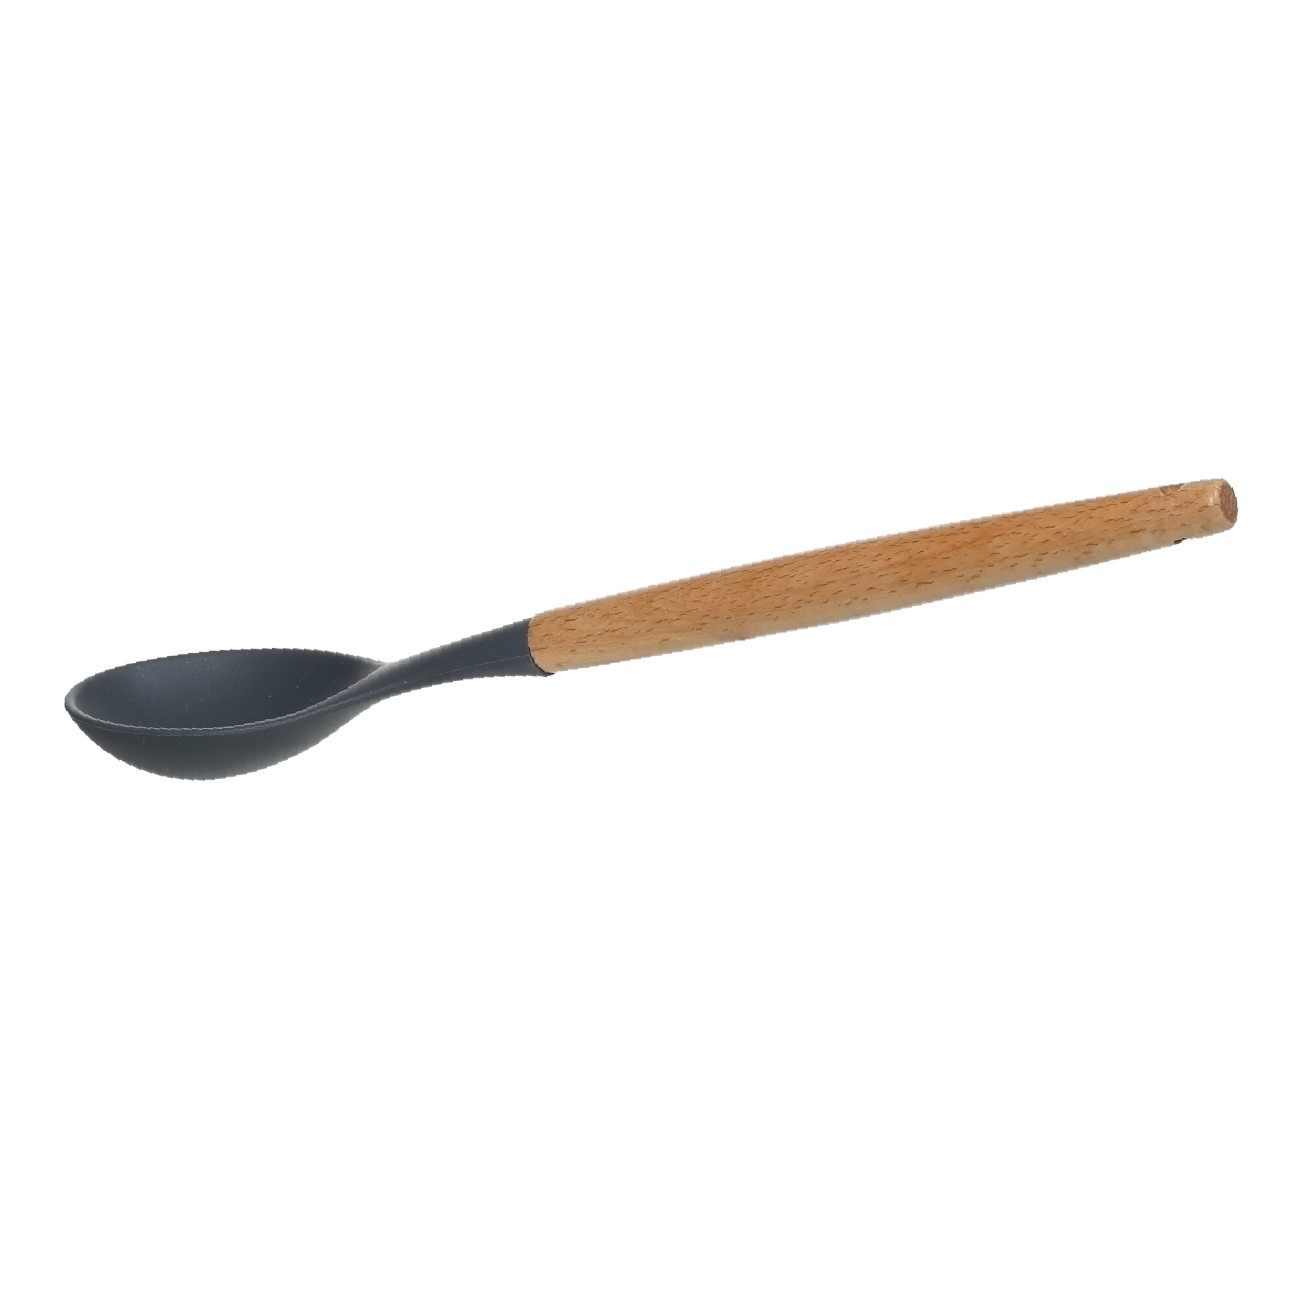 Serving spoon, 32 cm, silicone / wood, grey, Weekend изображение № 4